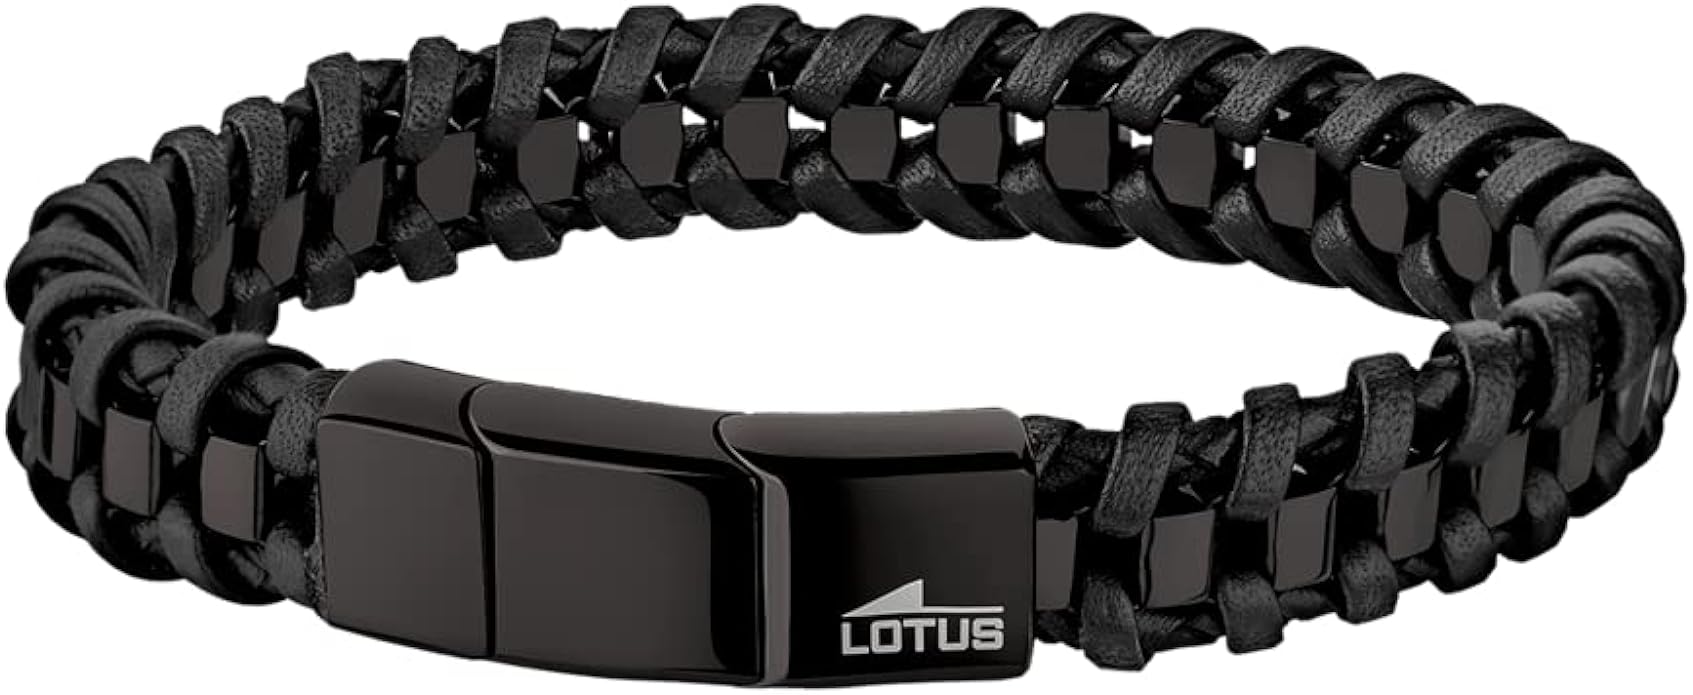 Lotus Bracelet Bracelet Urban Man LS2094-2/1 LS2094-2/1 Brand 